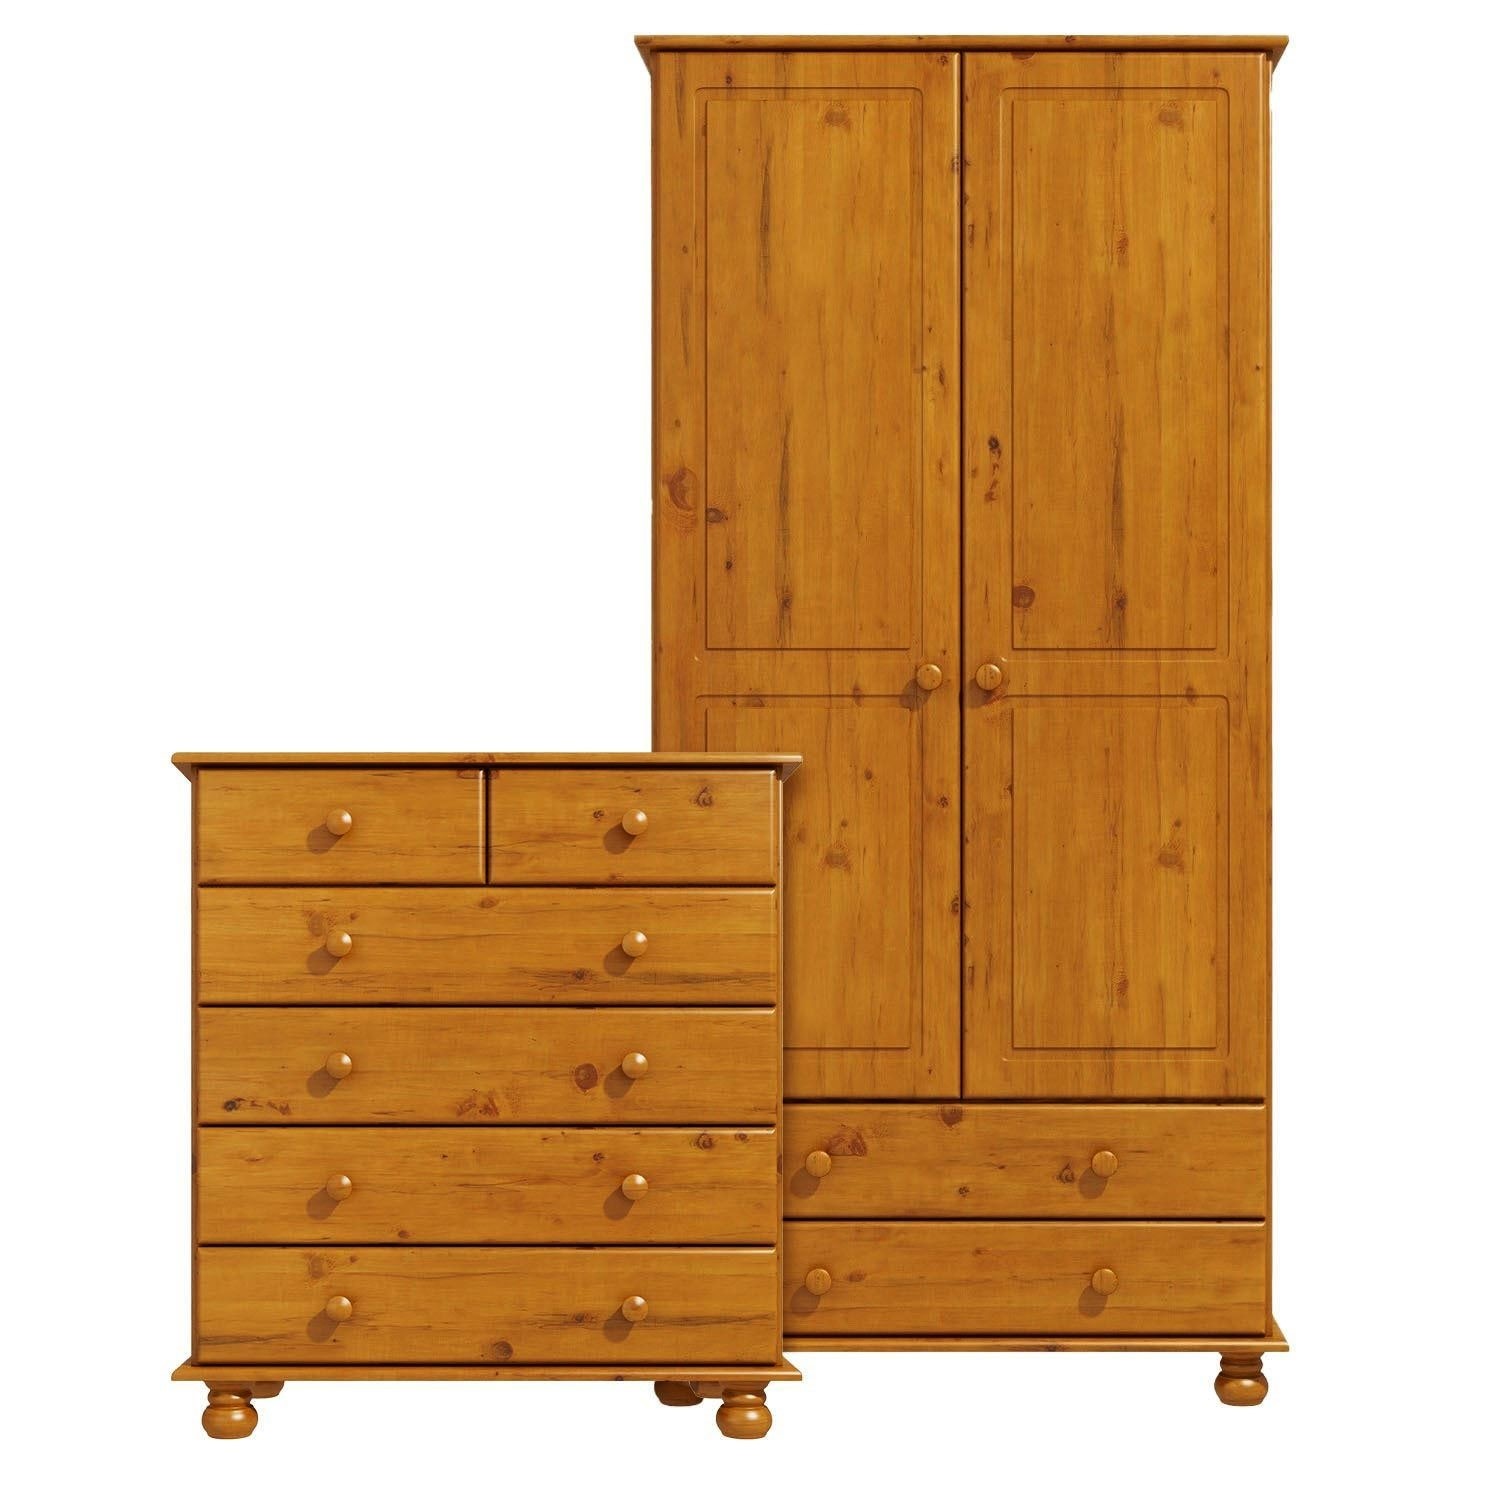 Photo of Pine wardrobe and chest of drawers set - hamilton